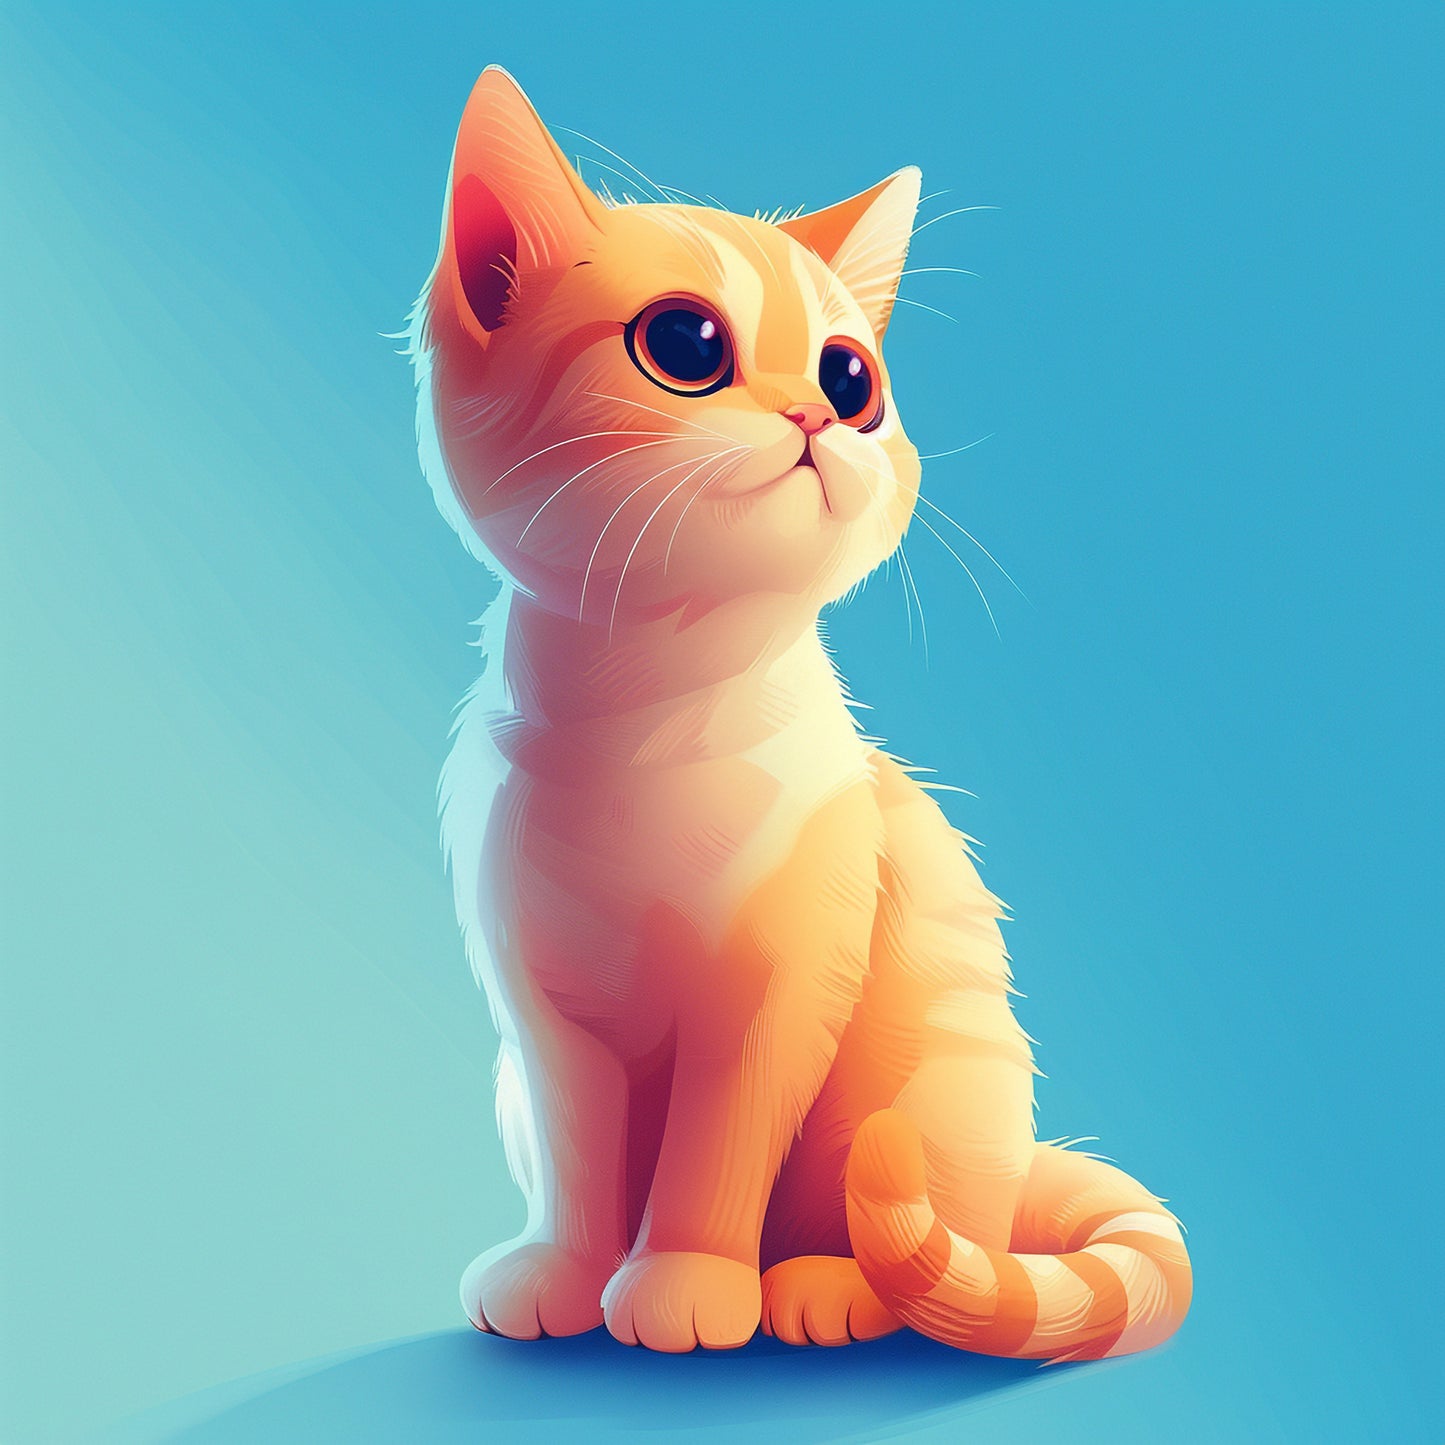 Charming Illustration of a Cute Orange Cat on Blue